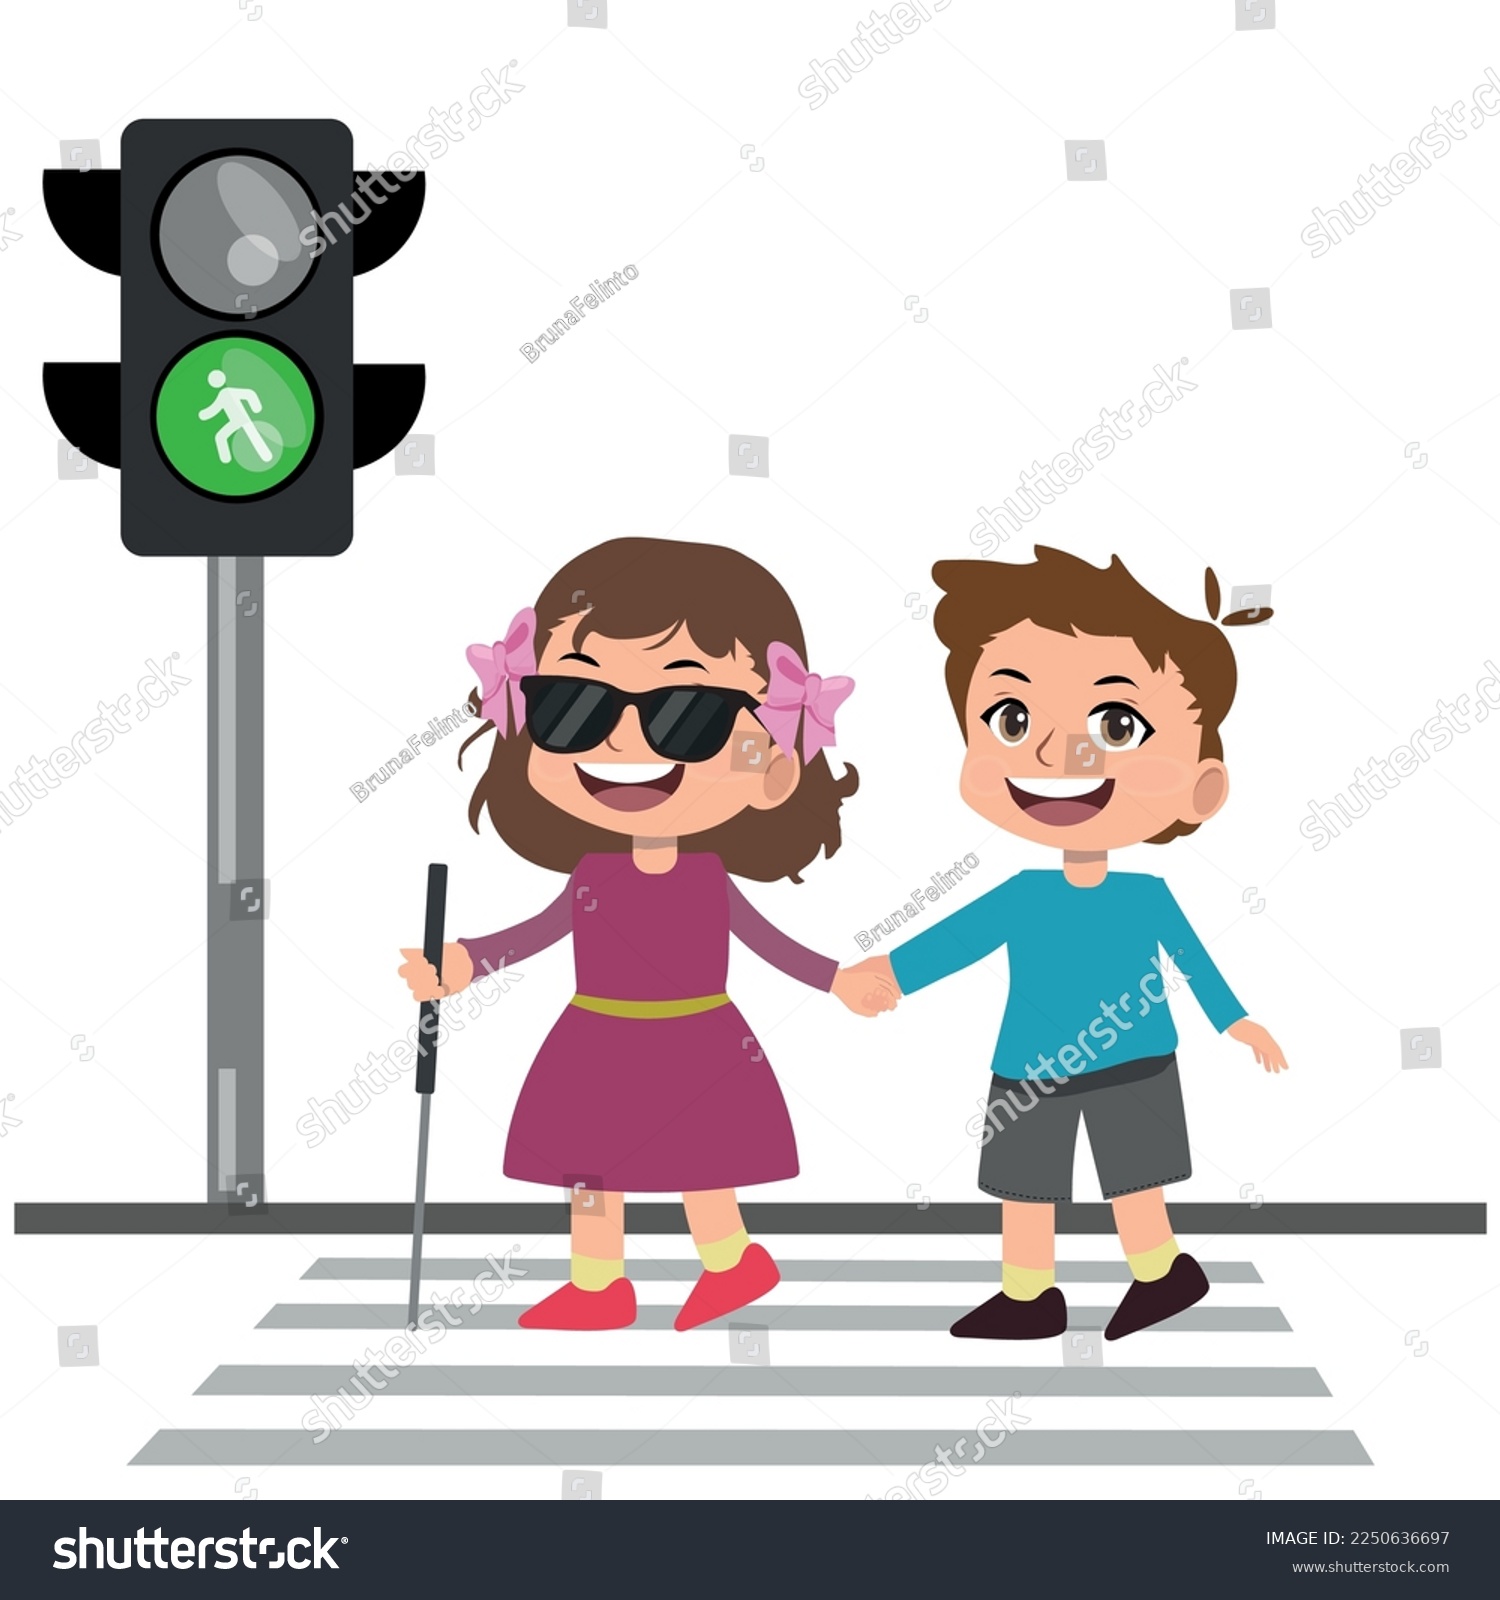 SVG of kid boy help blind friend cross road. svg